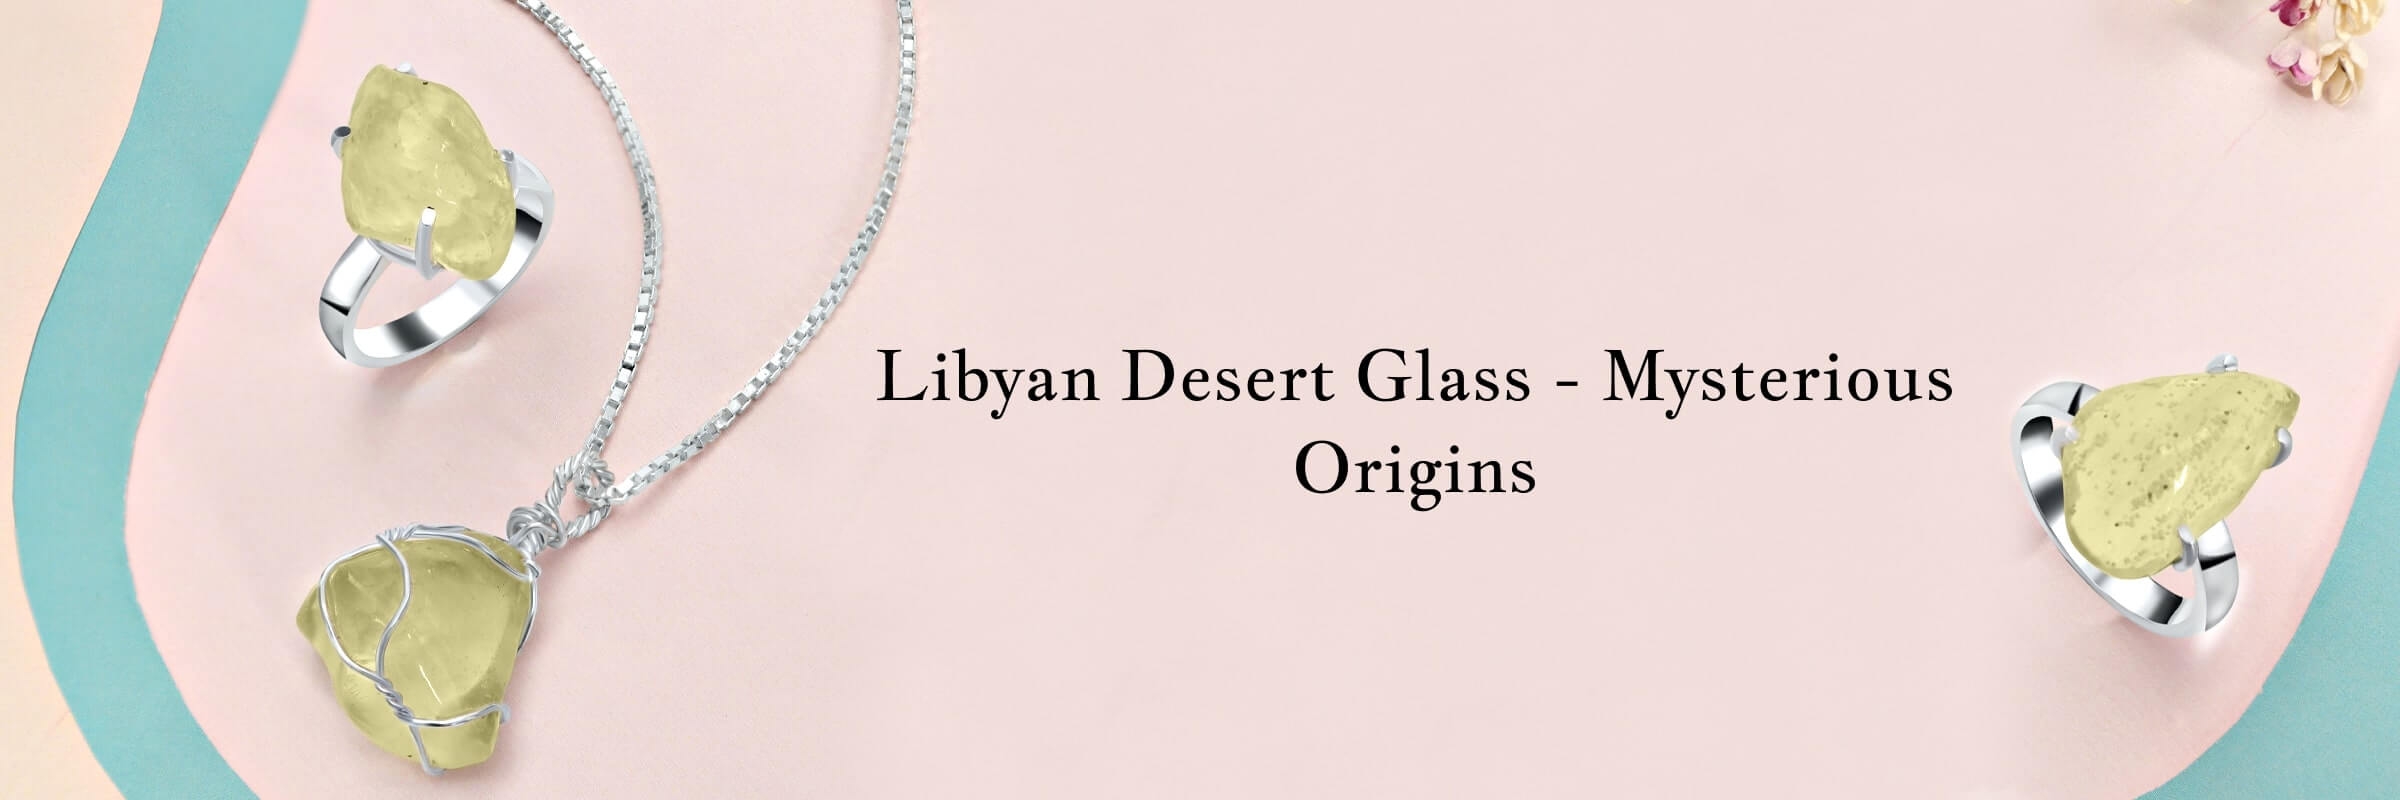 Origin of Libyan Desert Glass Gemstone